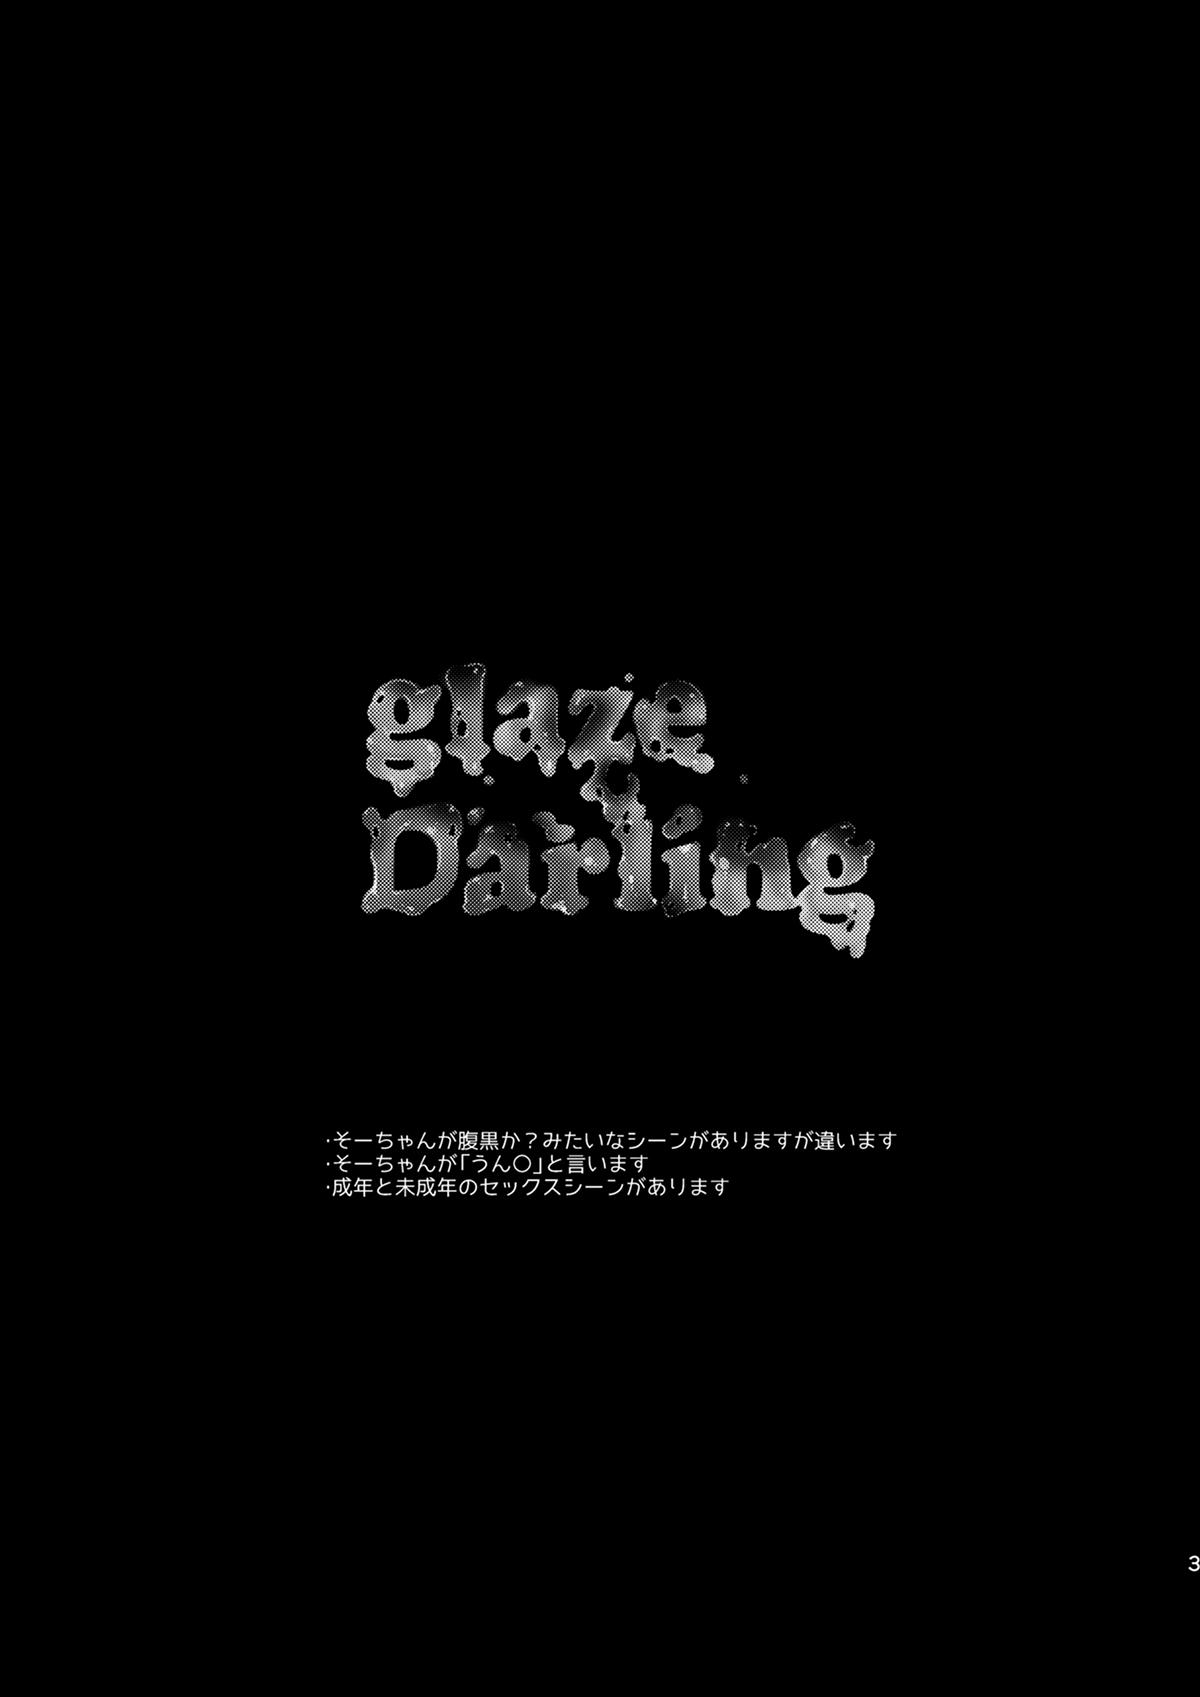 Newbie glaze Darling - Idolish7 Friends - Picture 2